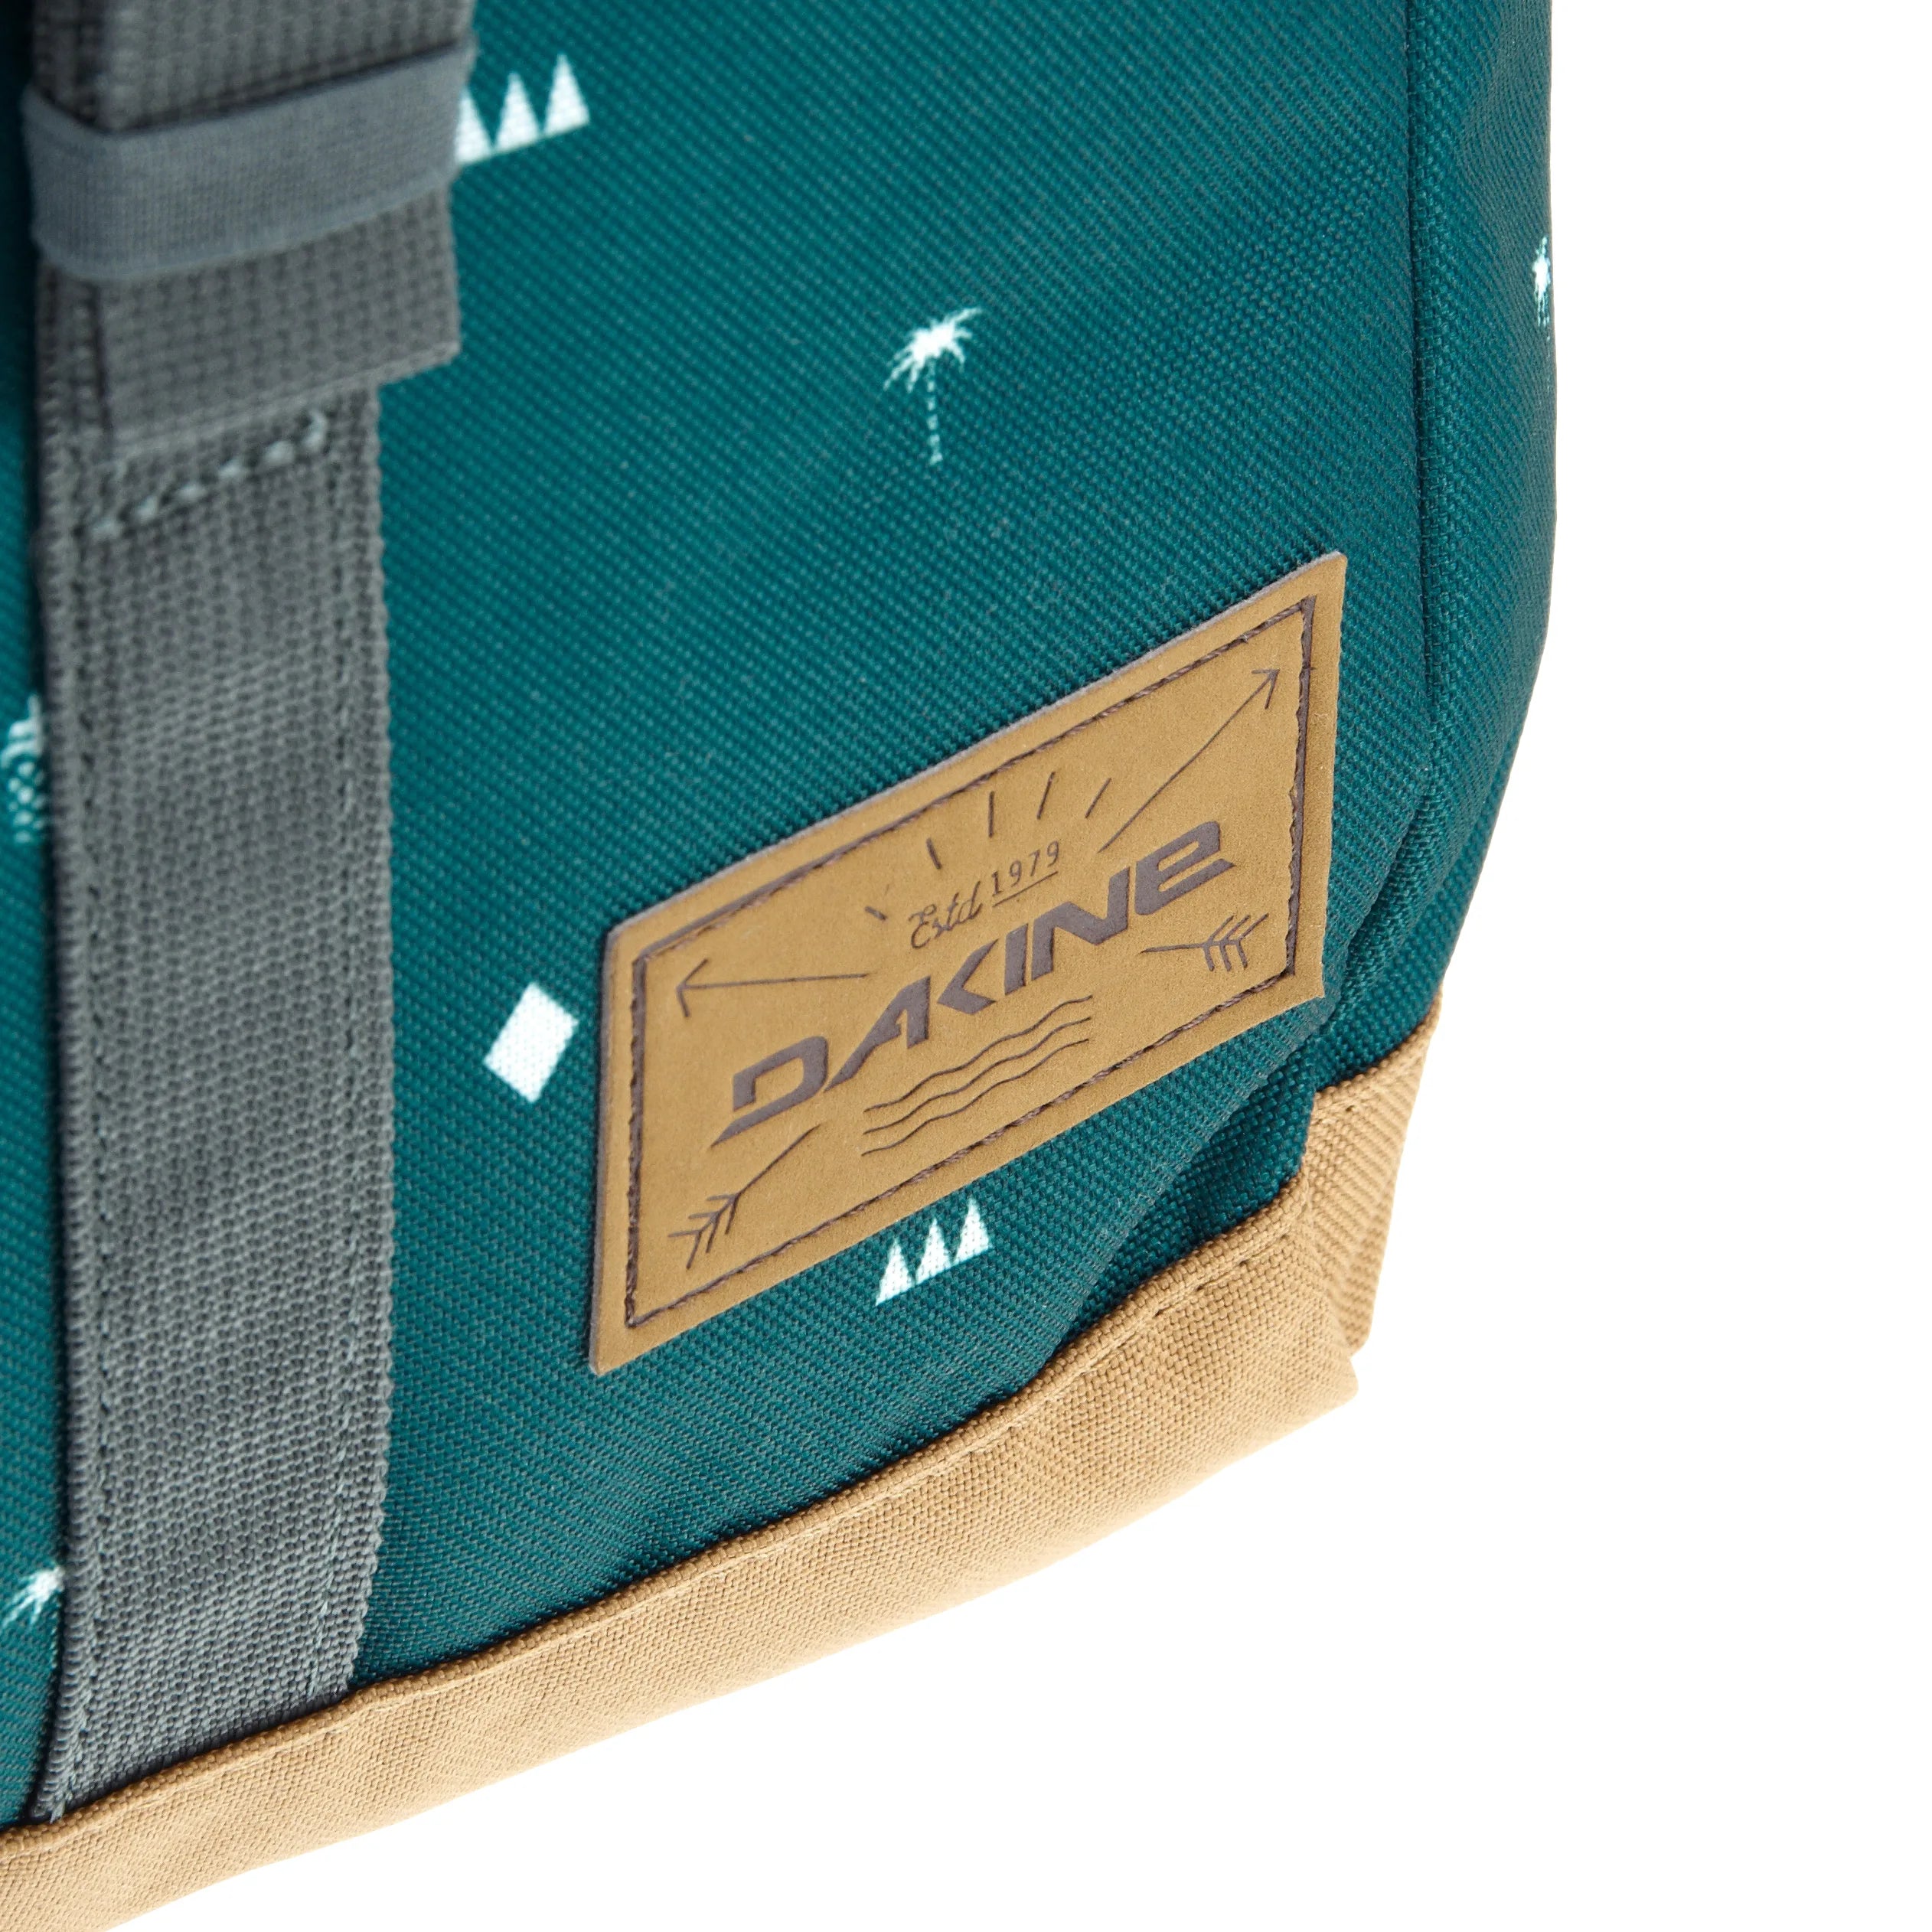 Dakine Boys Packs Range Laptop Backpack 48 cm - brick